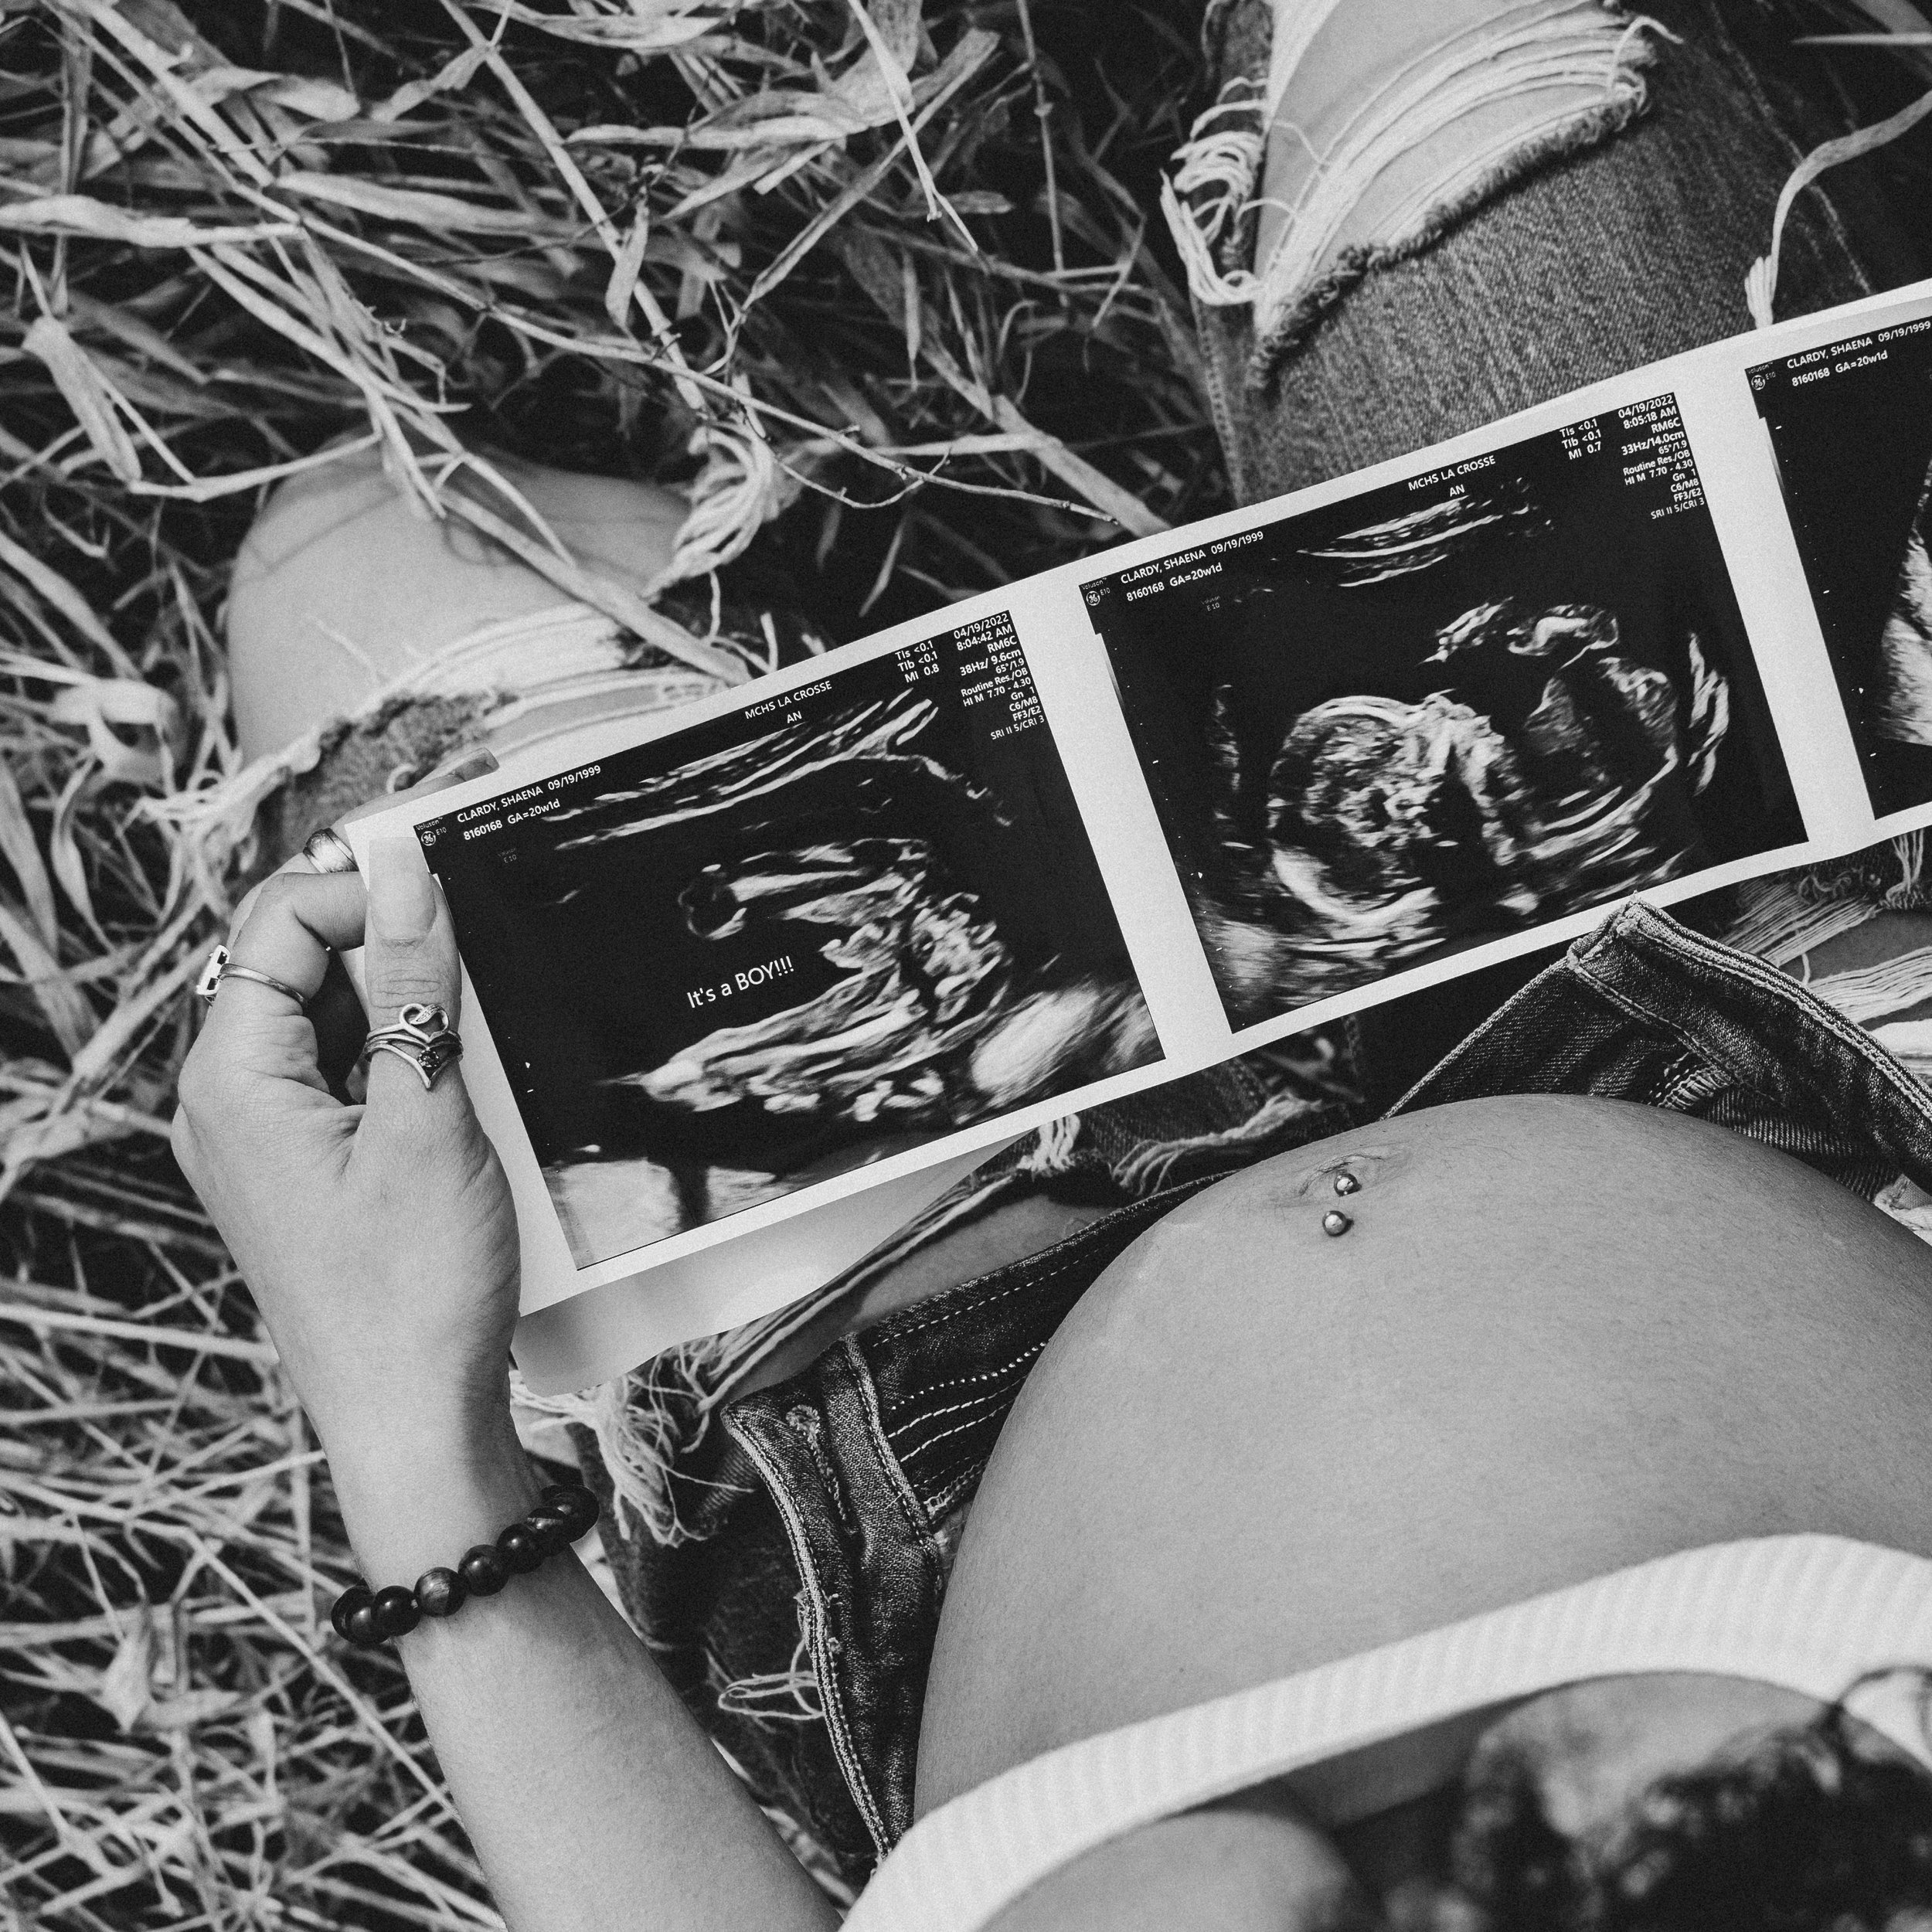 Natural maternity photos la crosse wi 20 weeks pregnant